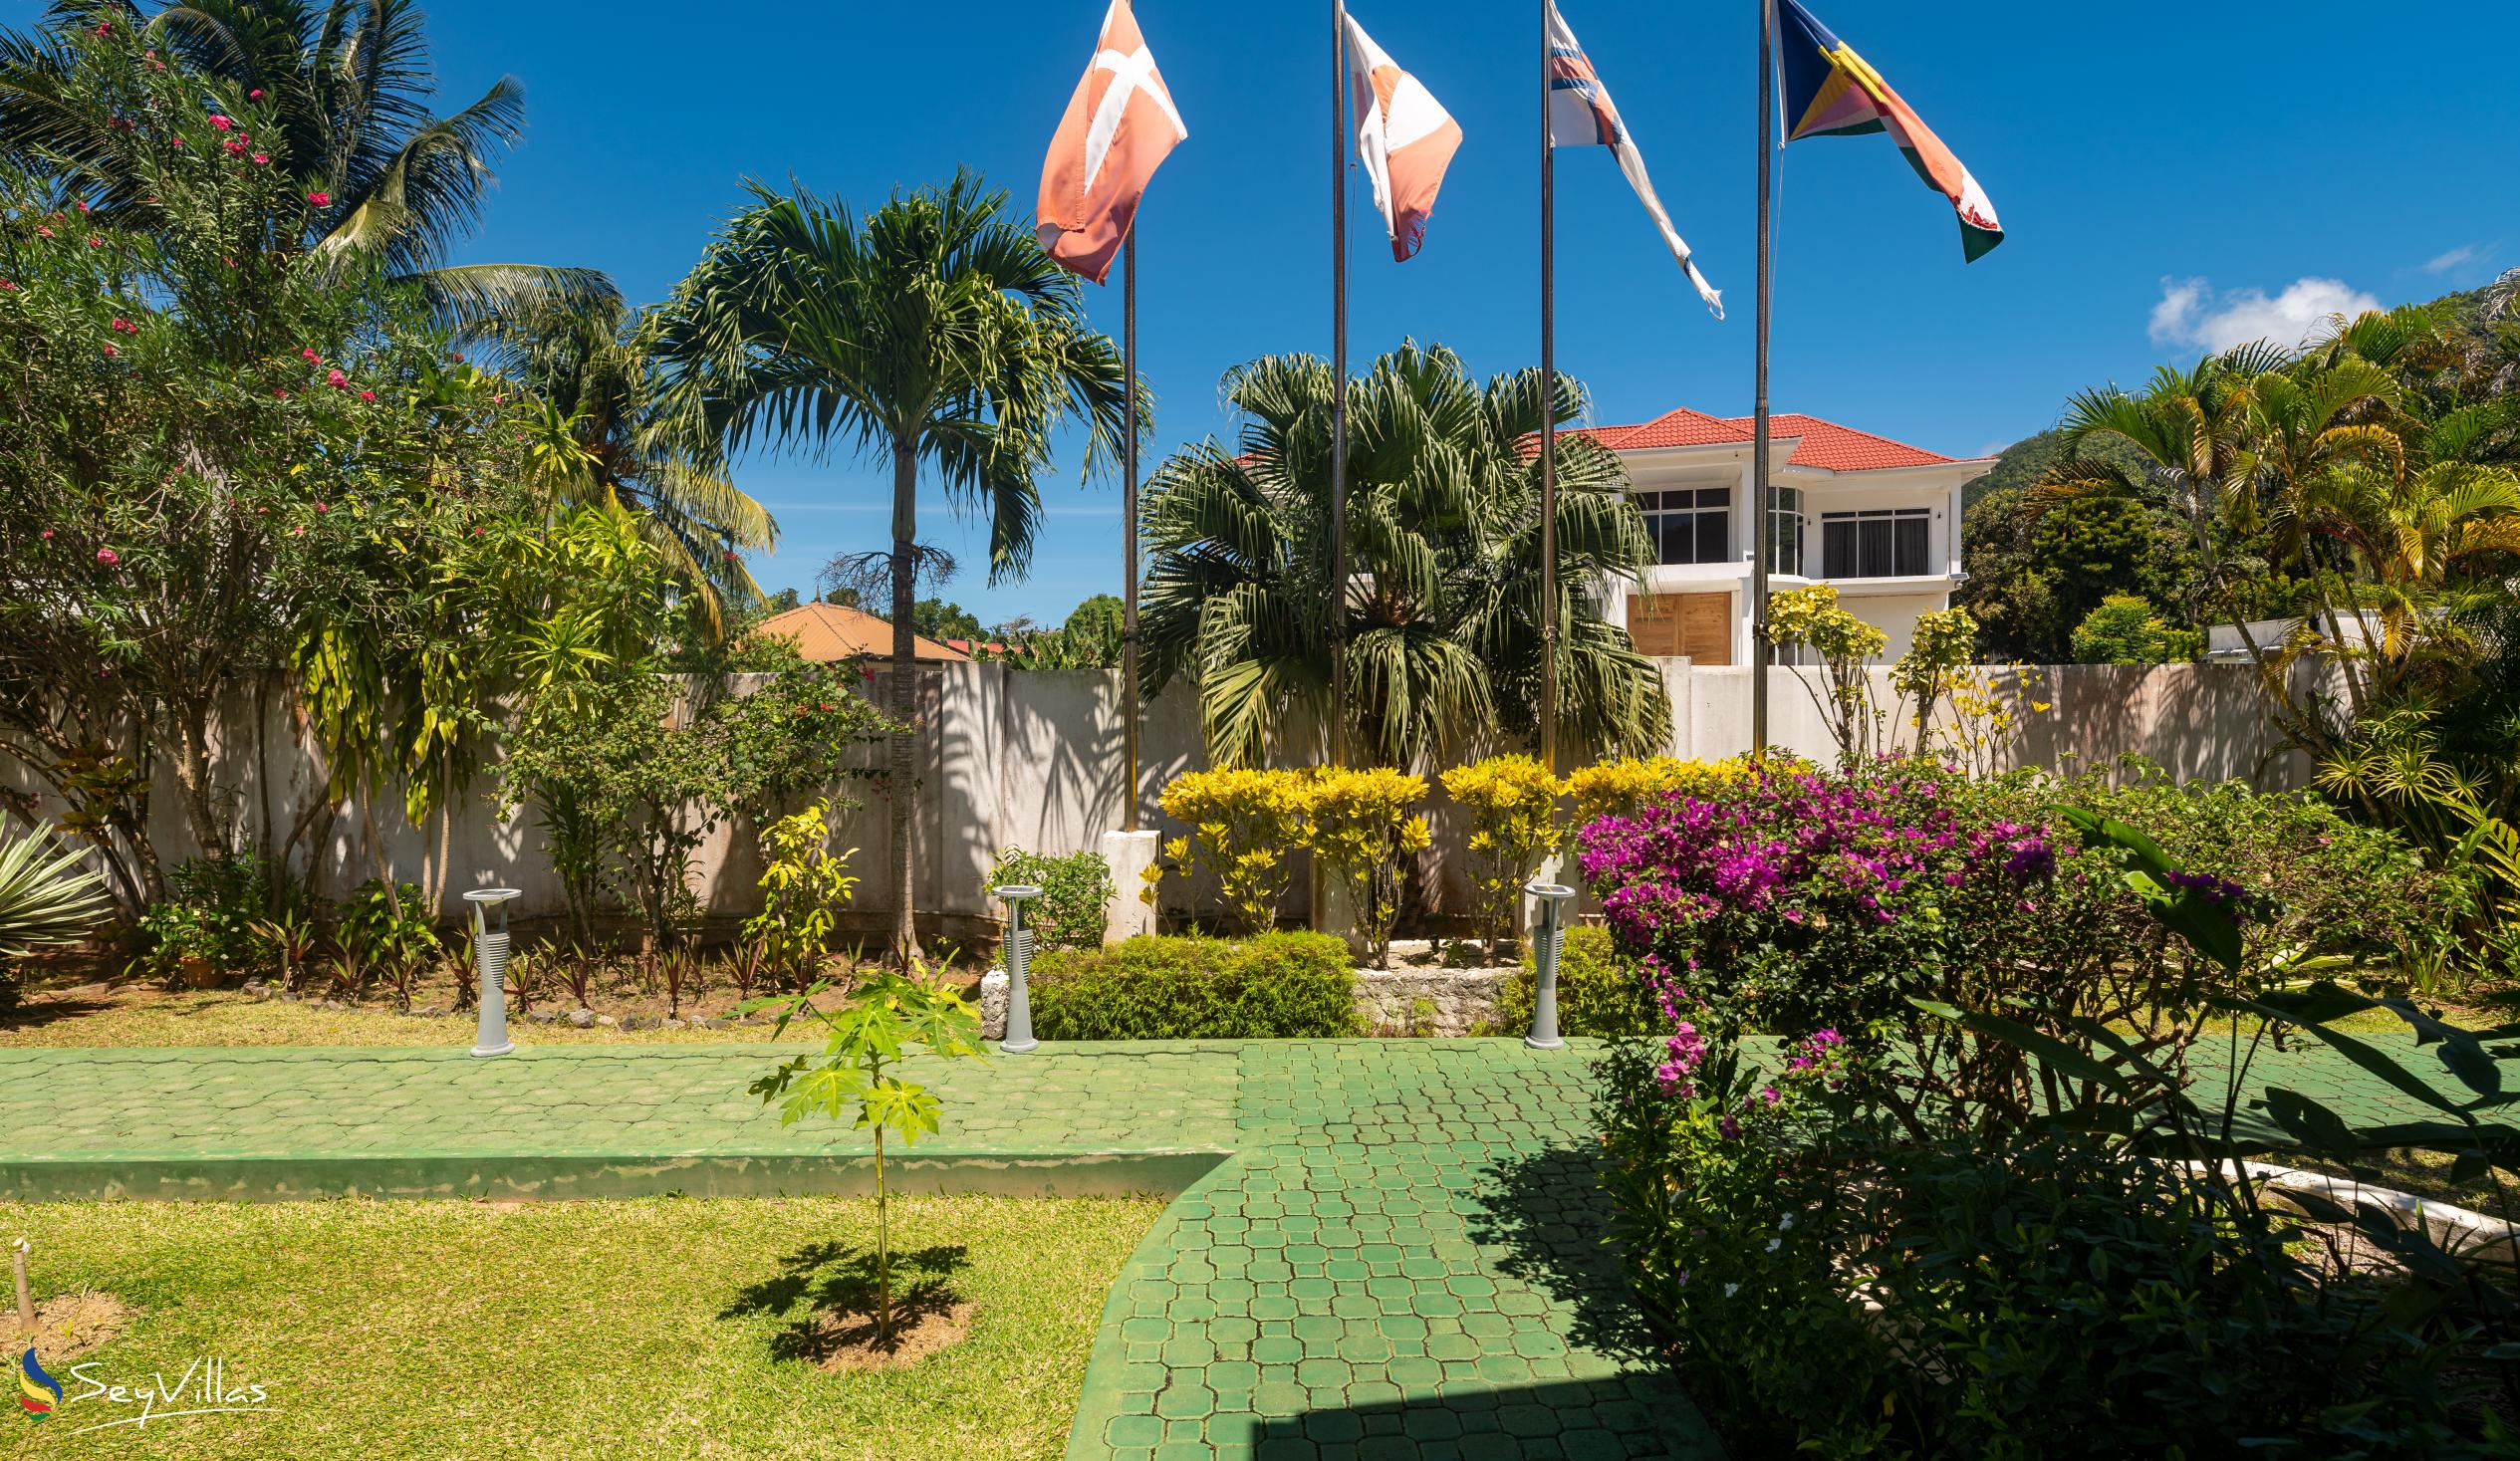 Foto 17: Villa Caballero - Aussenbereich - Mahé (Seychellen)